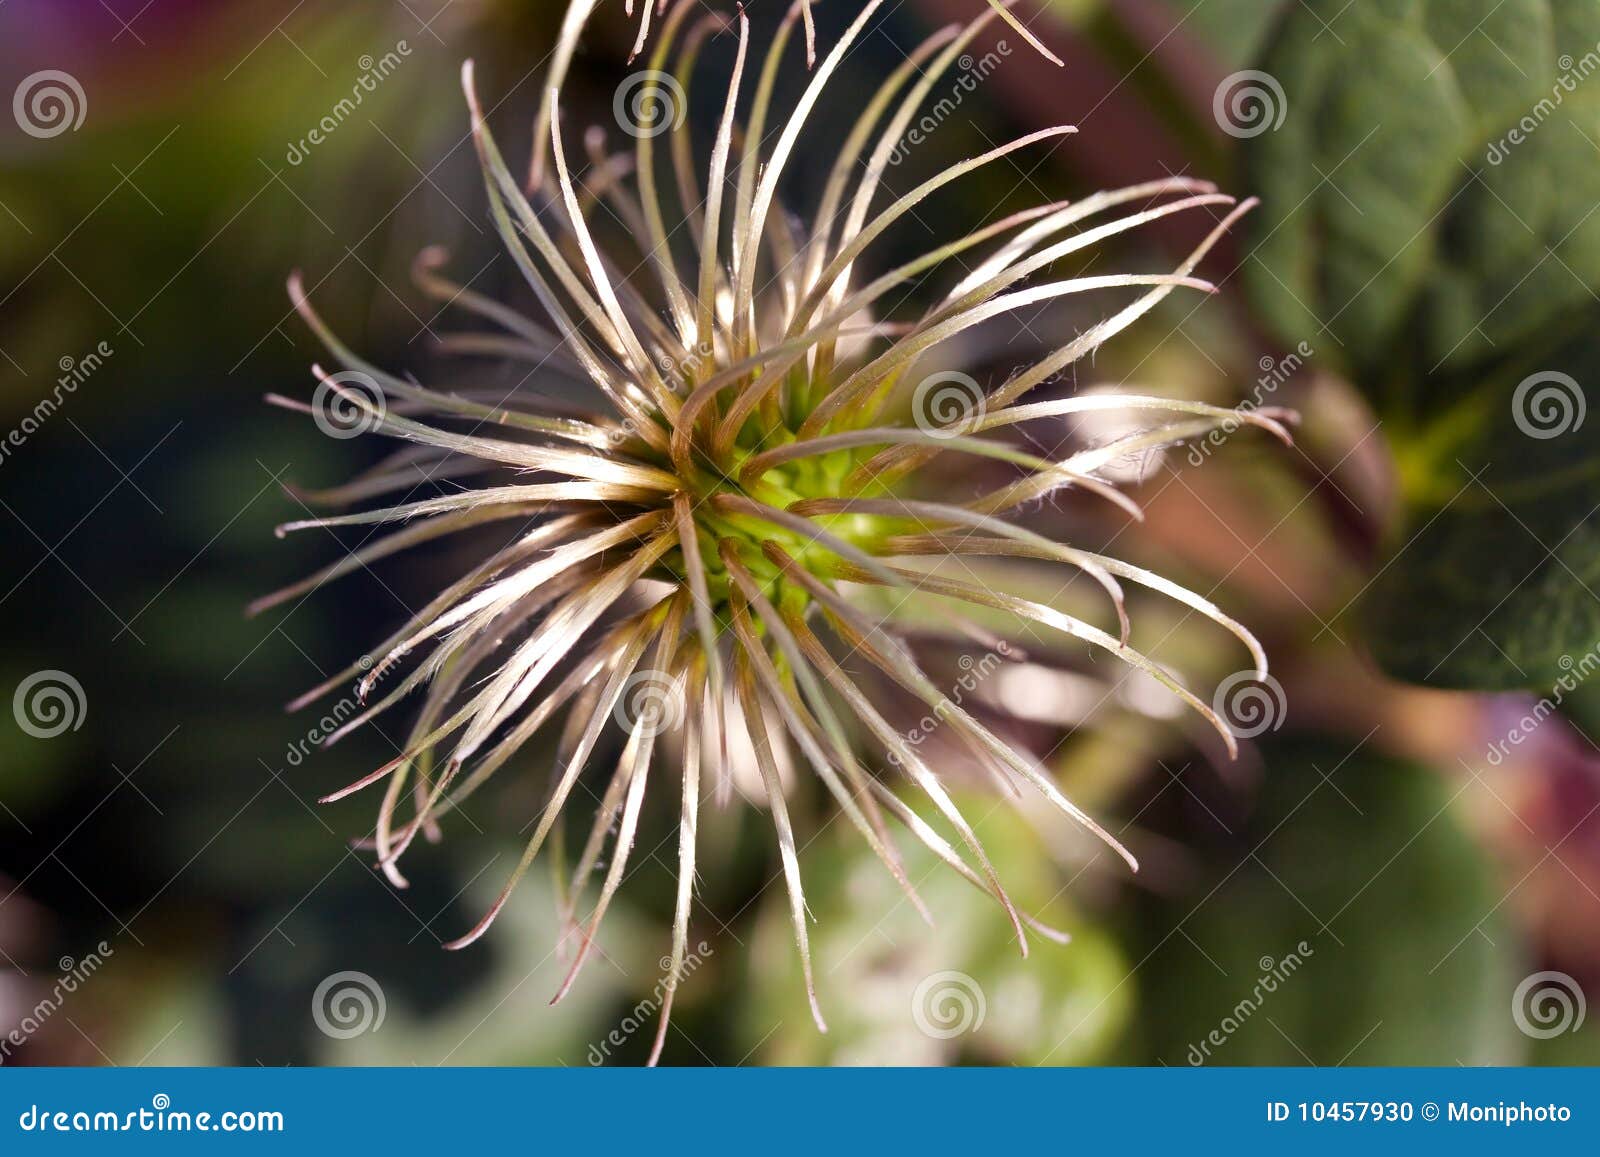 dalia flower on the garden